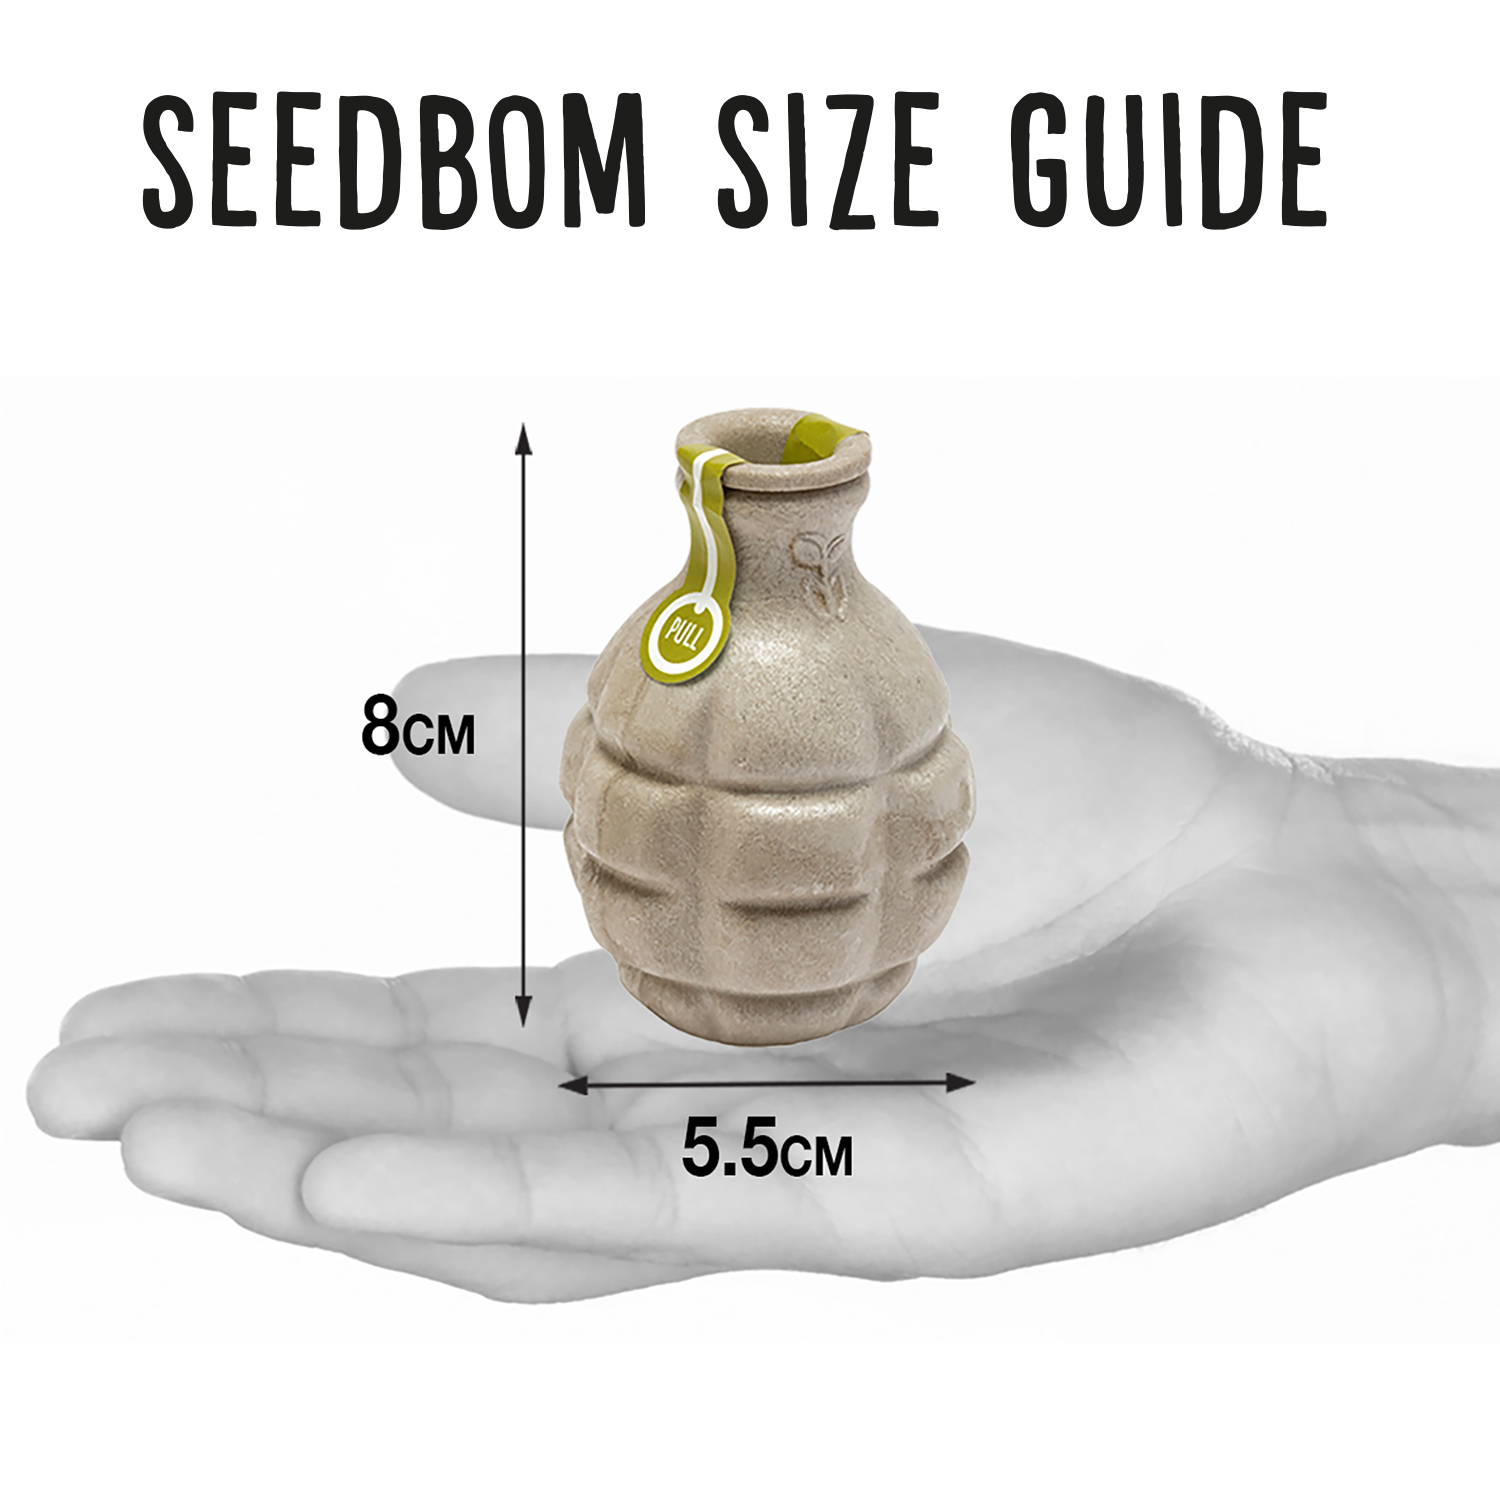 Seedbom size guide